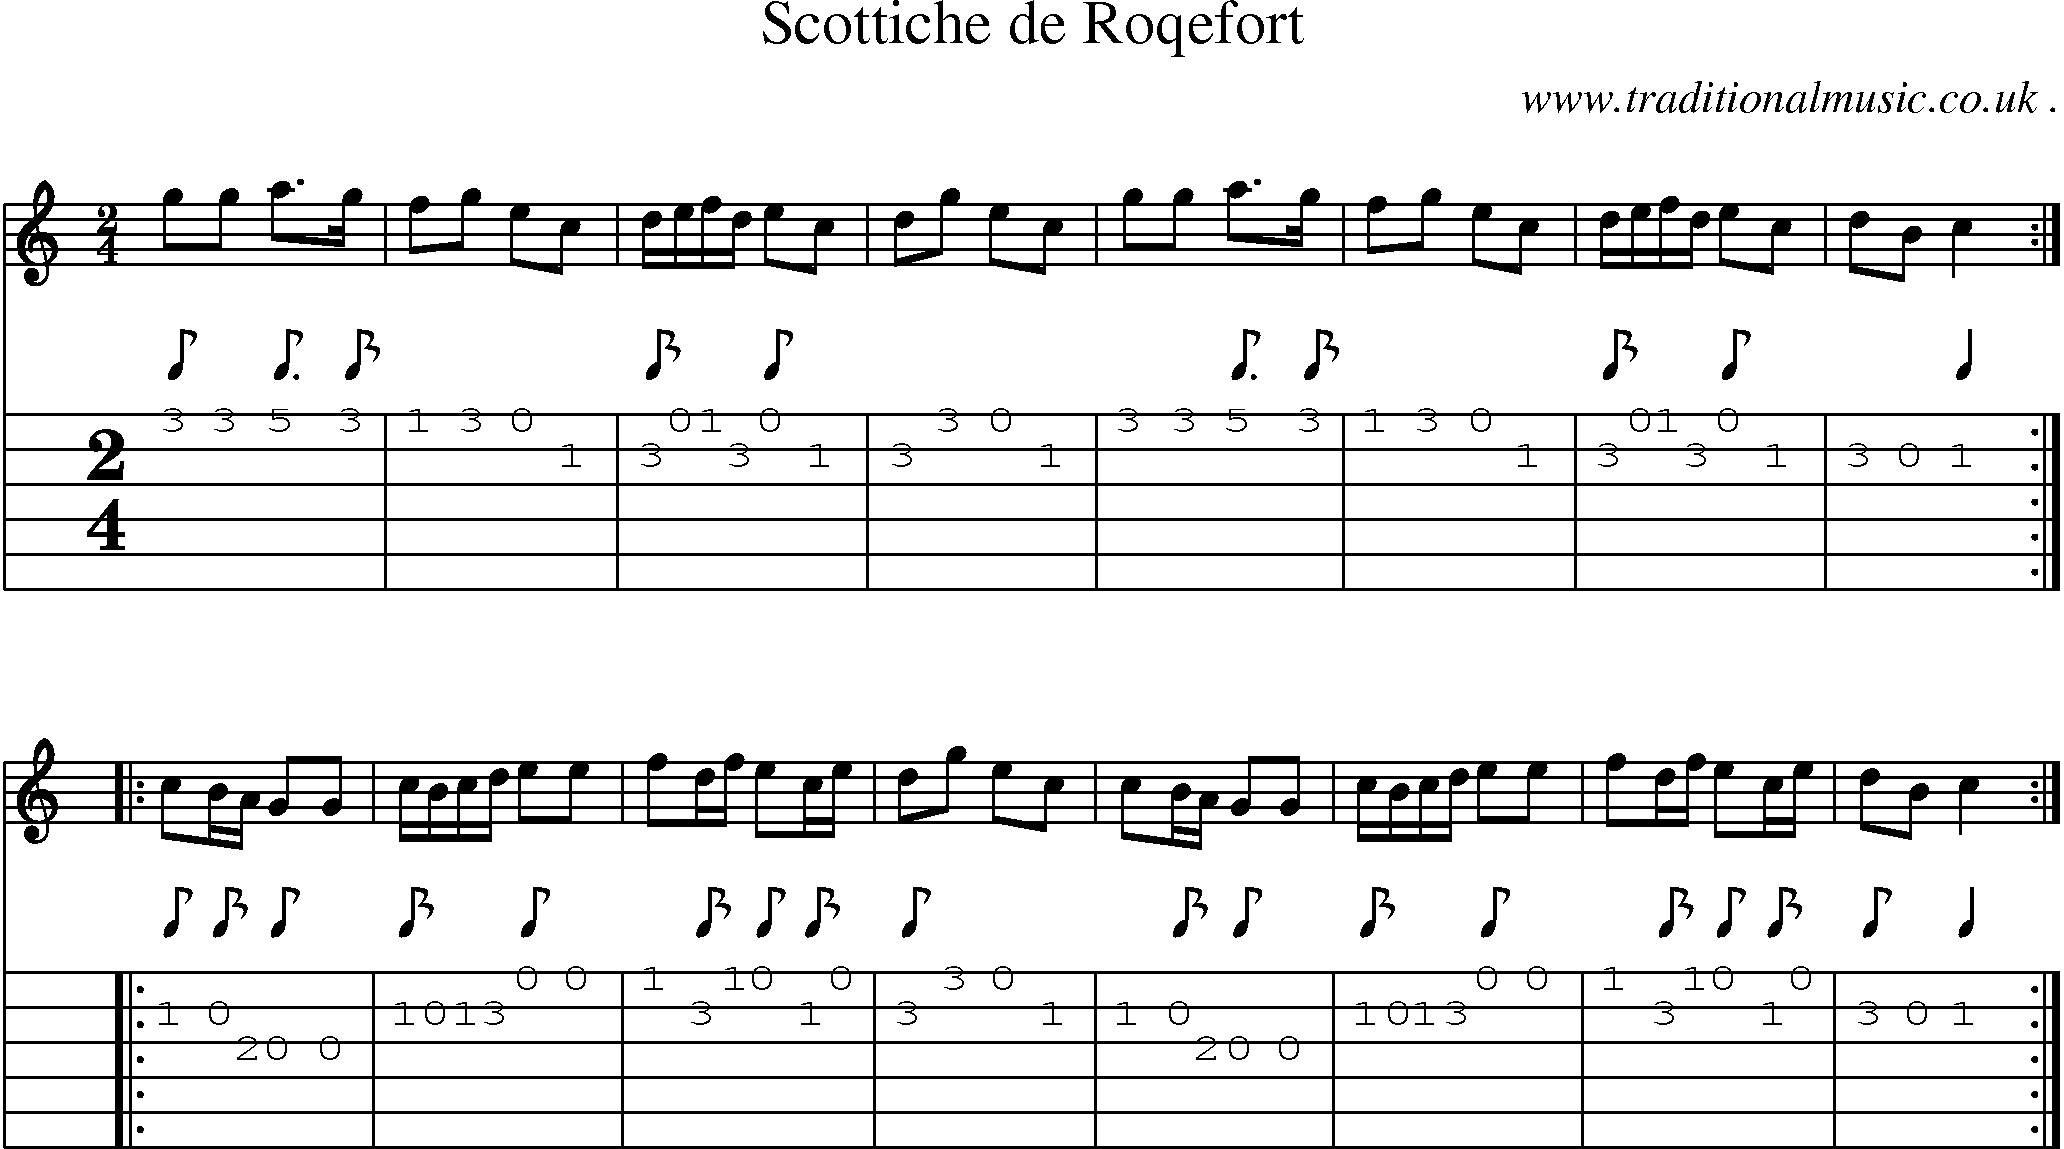 Sheet-Music and Guitar Tabs for Scottiche De Roqefort